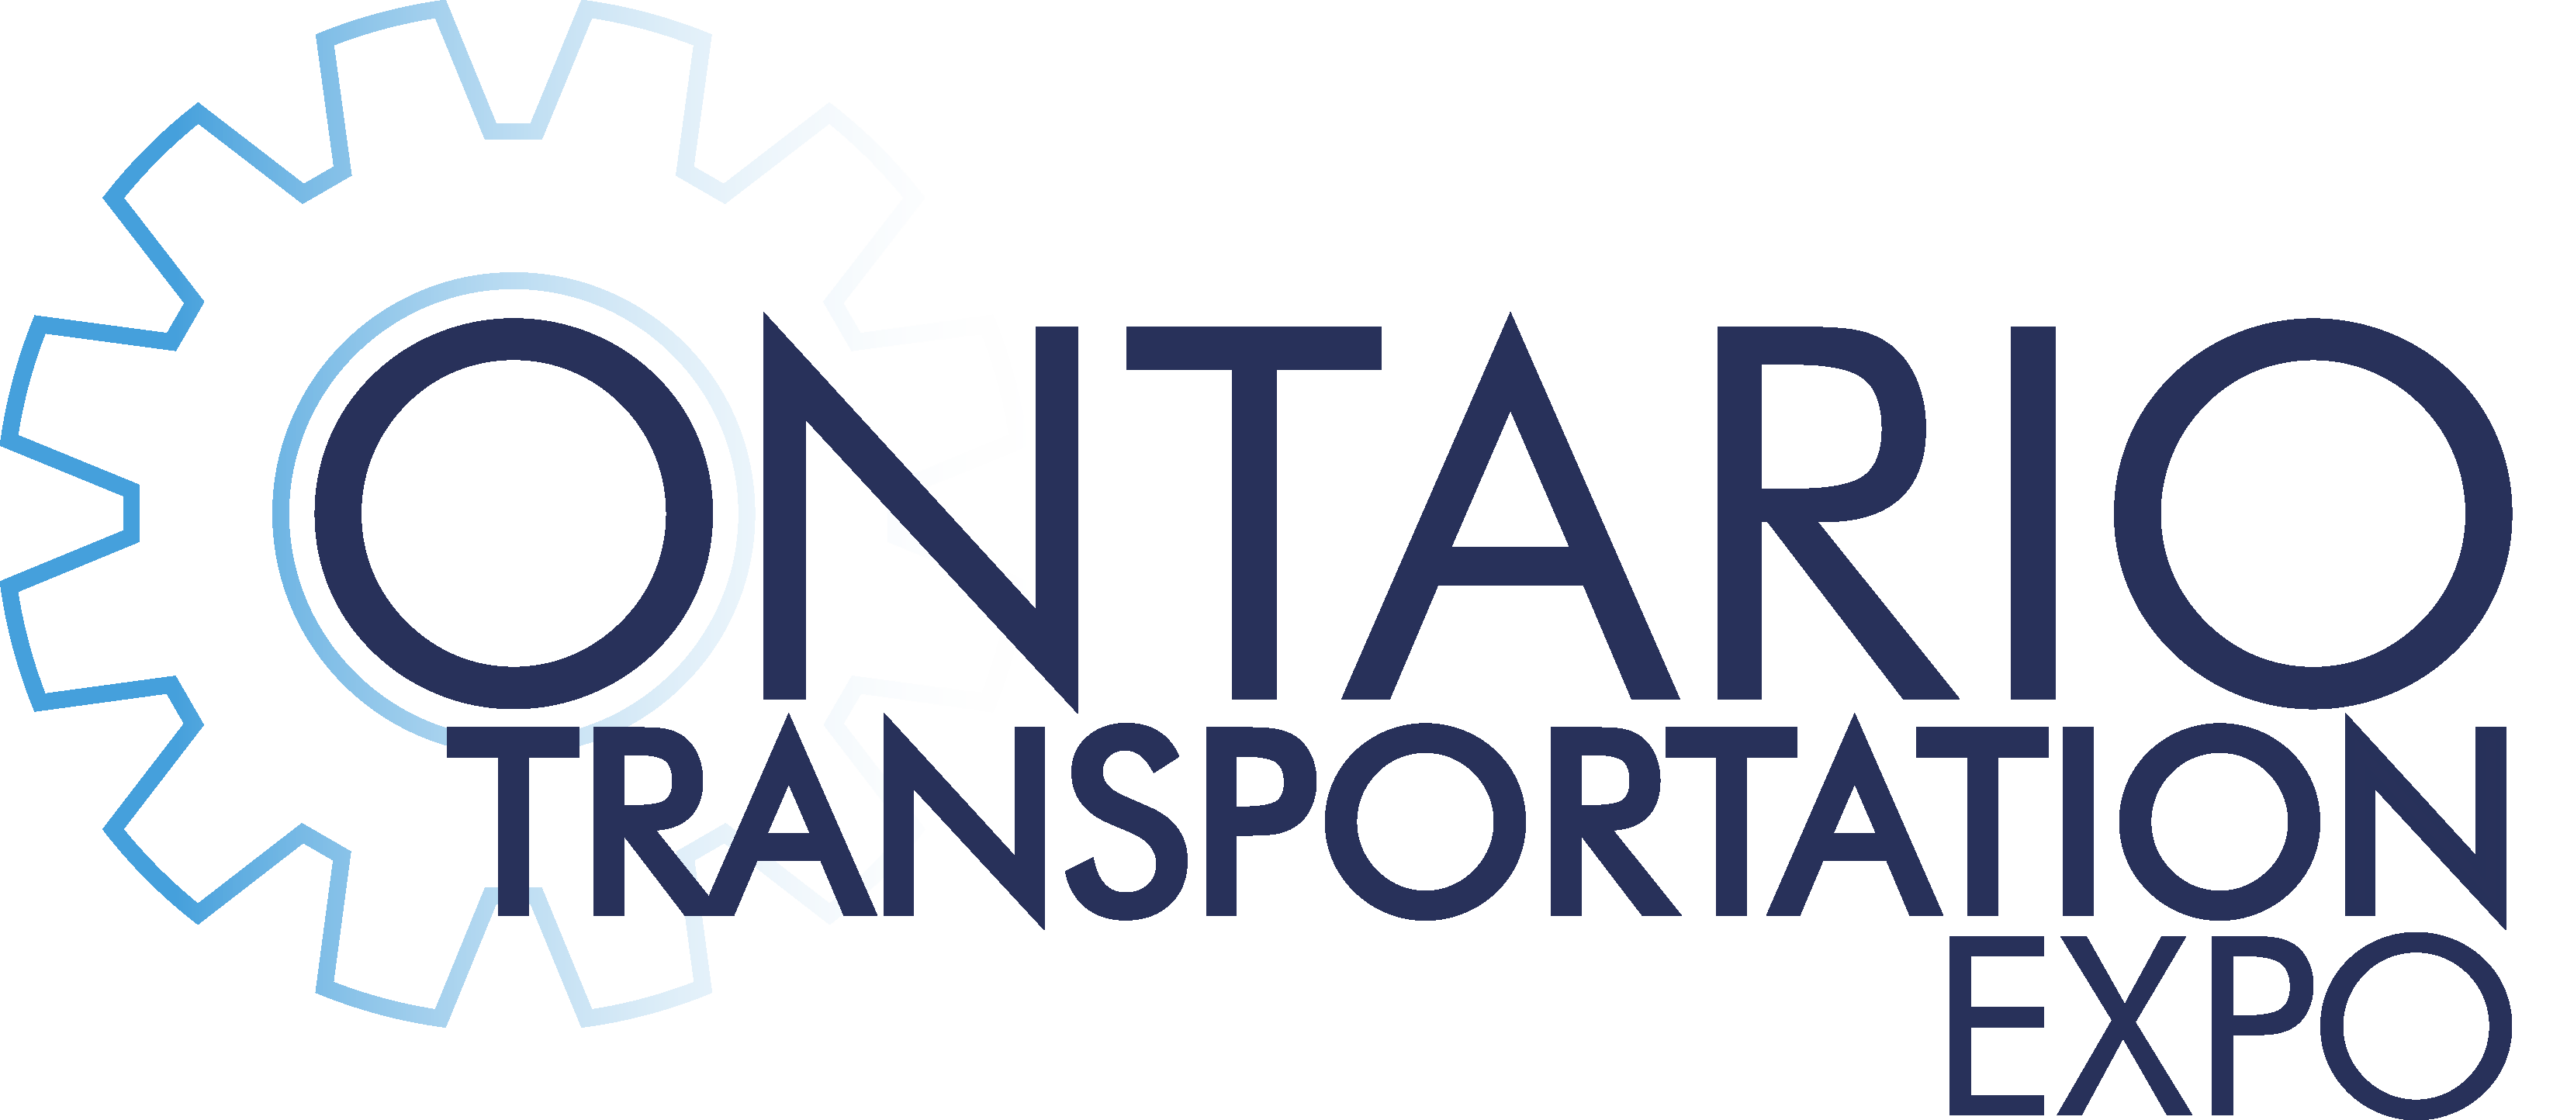 Ontario Transportation Expo